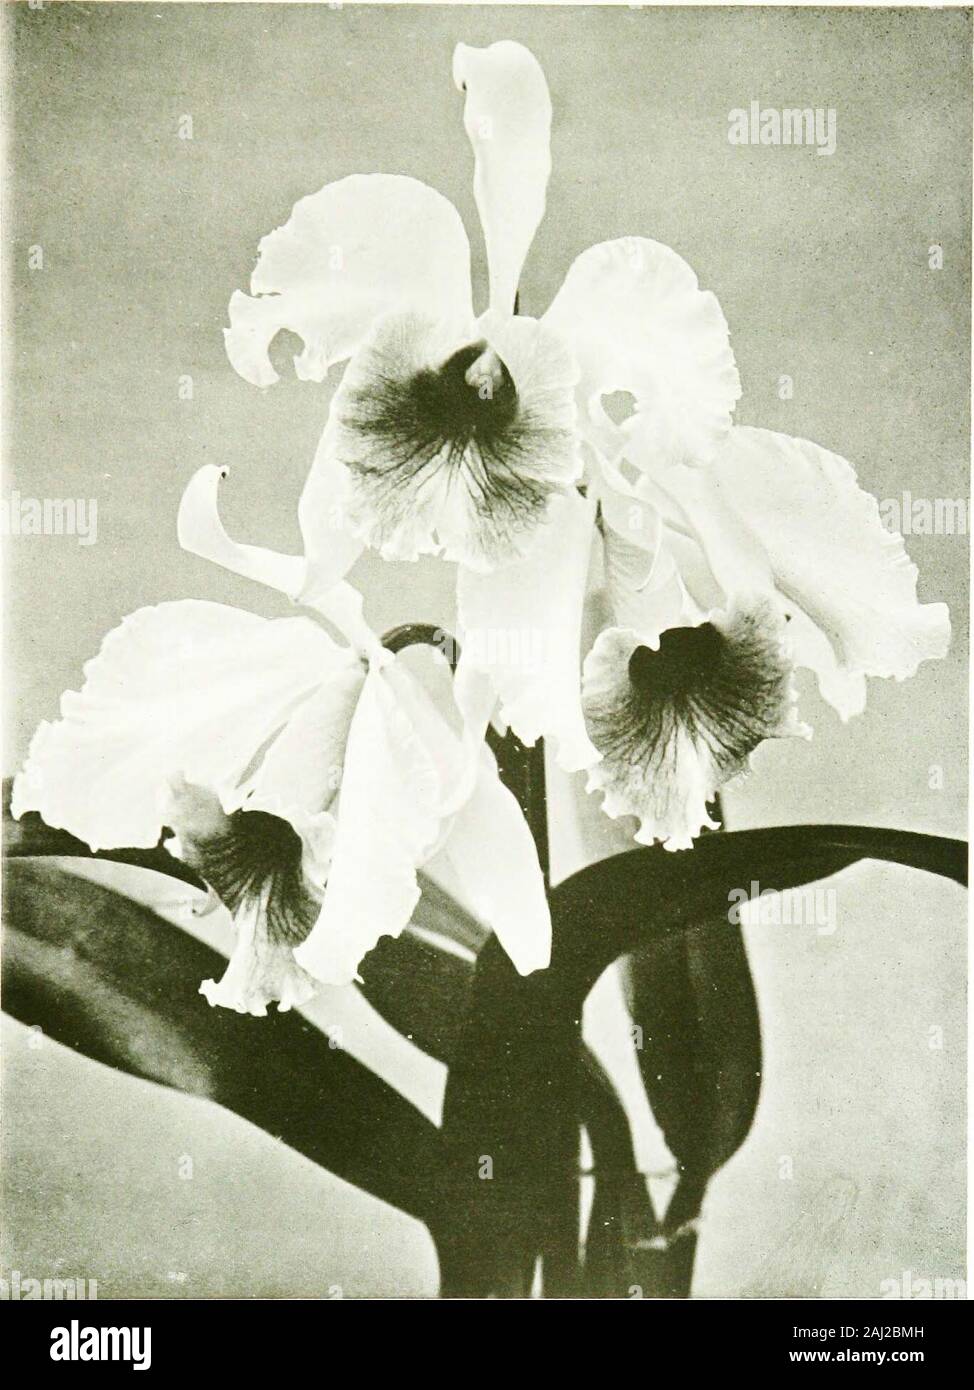 Orchids for everyone . x Epidendrum), Dia-l^elia (Diacrium x Lcelia), Epi-cattleya (Epidendrum x Cattleya), Epi-lcelia (Epidendrum x Lselia),Epi-phronitis (Epidendrum x Sophronitis), Odont-ioda (Odonto-glossum X Cochlioda), Odont-onia (Odontoglossum x Miltonia),Phaio-calanthe (Phaius x Calanthe), Phaio-cymbidium (PhaiusX Cymbidium), Schombo-cattleya (Schomburgkia x Cattleya),Sophro-cattleya (Sophronitis x Cattleya), Sophro-lselia (SophronitisX Laslia), Zygo-batemannia (Zygopetalum x Batemannia), Zygo-colax (Zygopetalum x Colax), and Zygonisia (Zygopetalum xAganisia). Anoectomaria (Anoectochilu Stock Photo